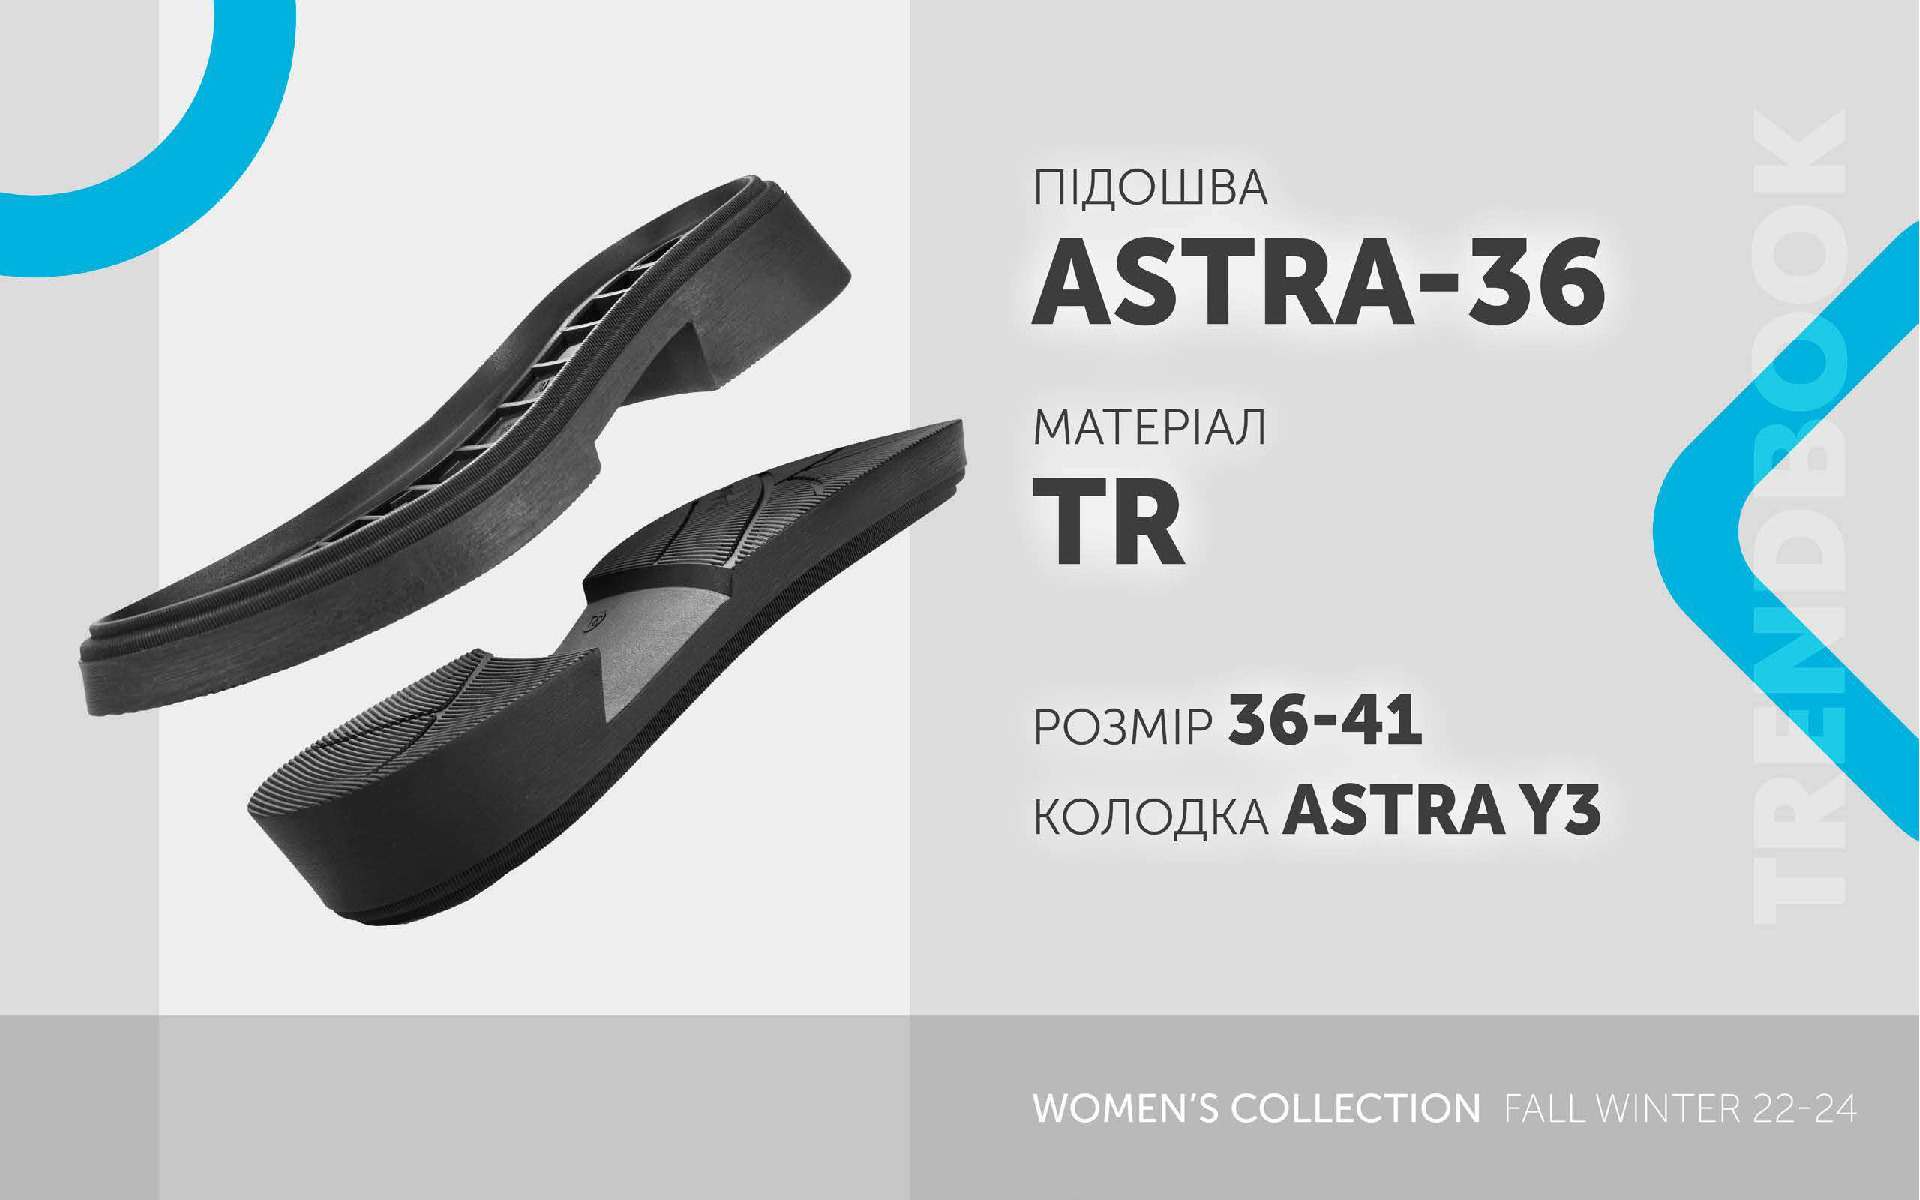 Astra-36